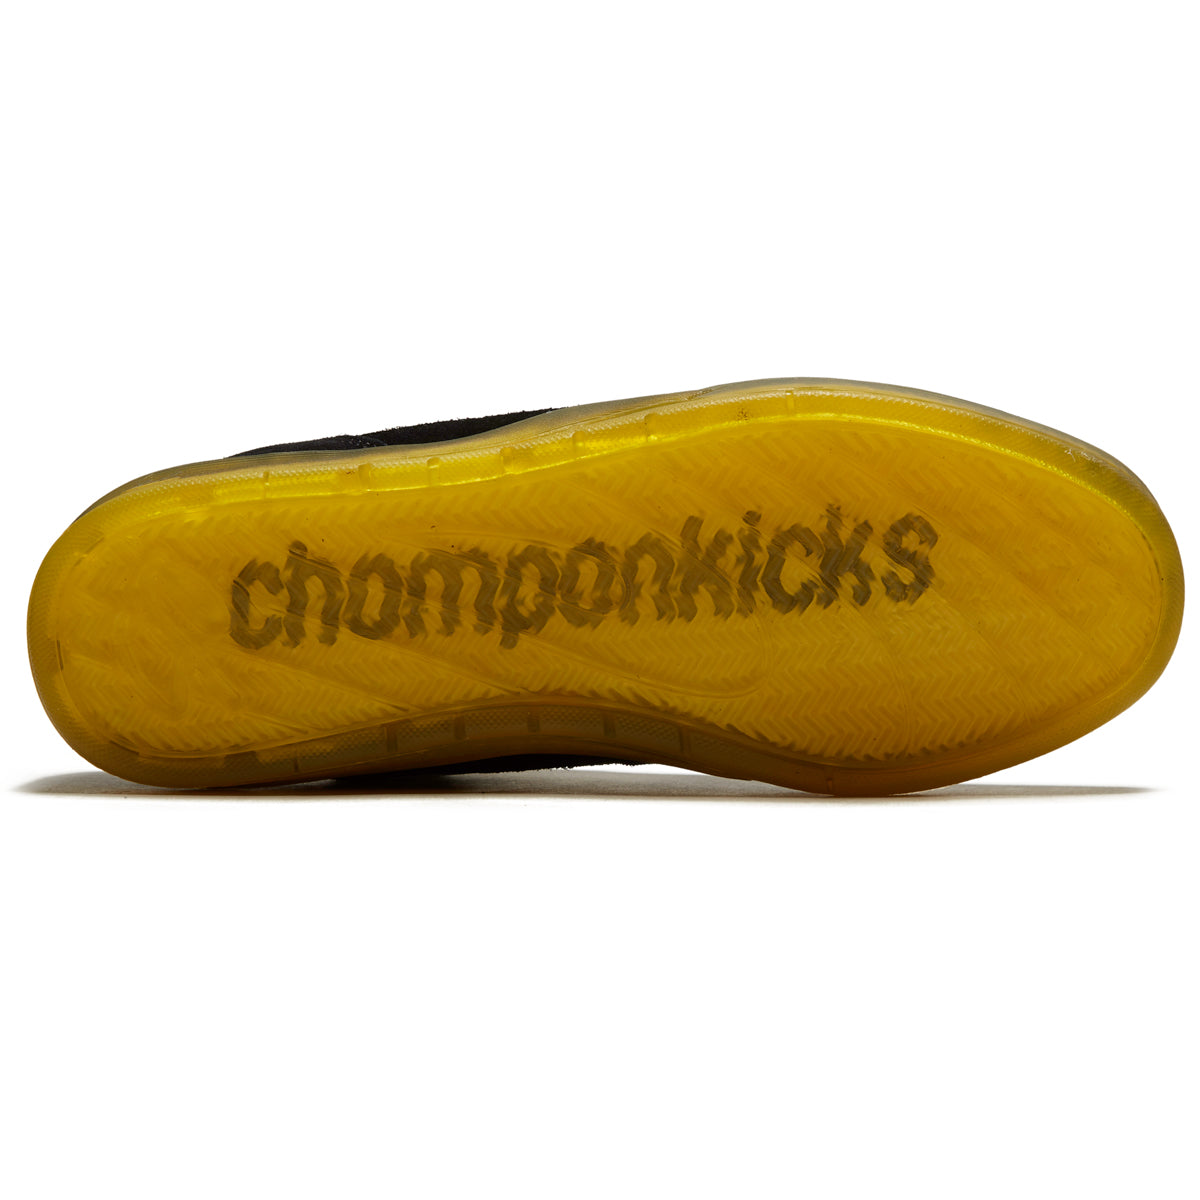 eS x Chomp On Kicks Swift 1.5 Shoes - Black/White/Yellow image 4